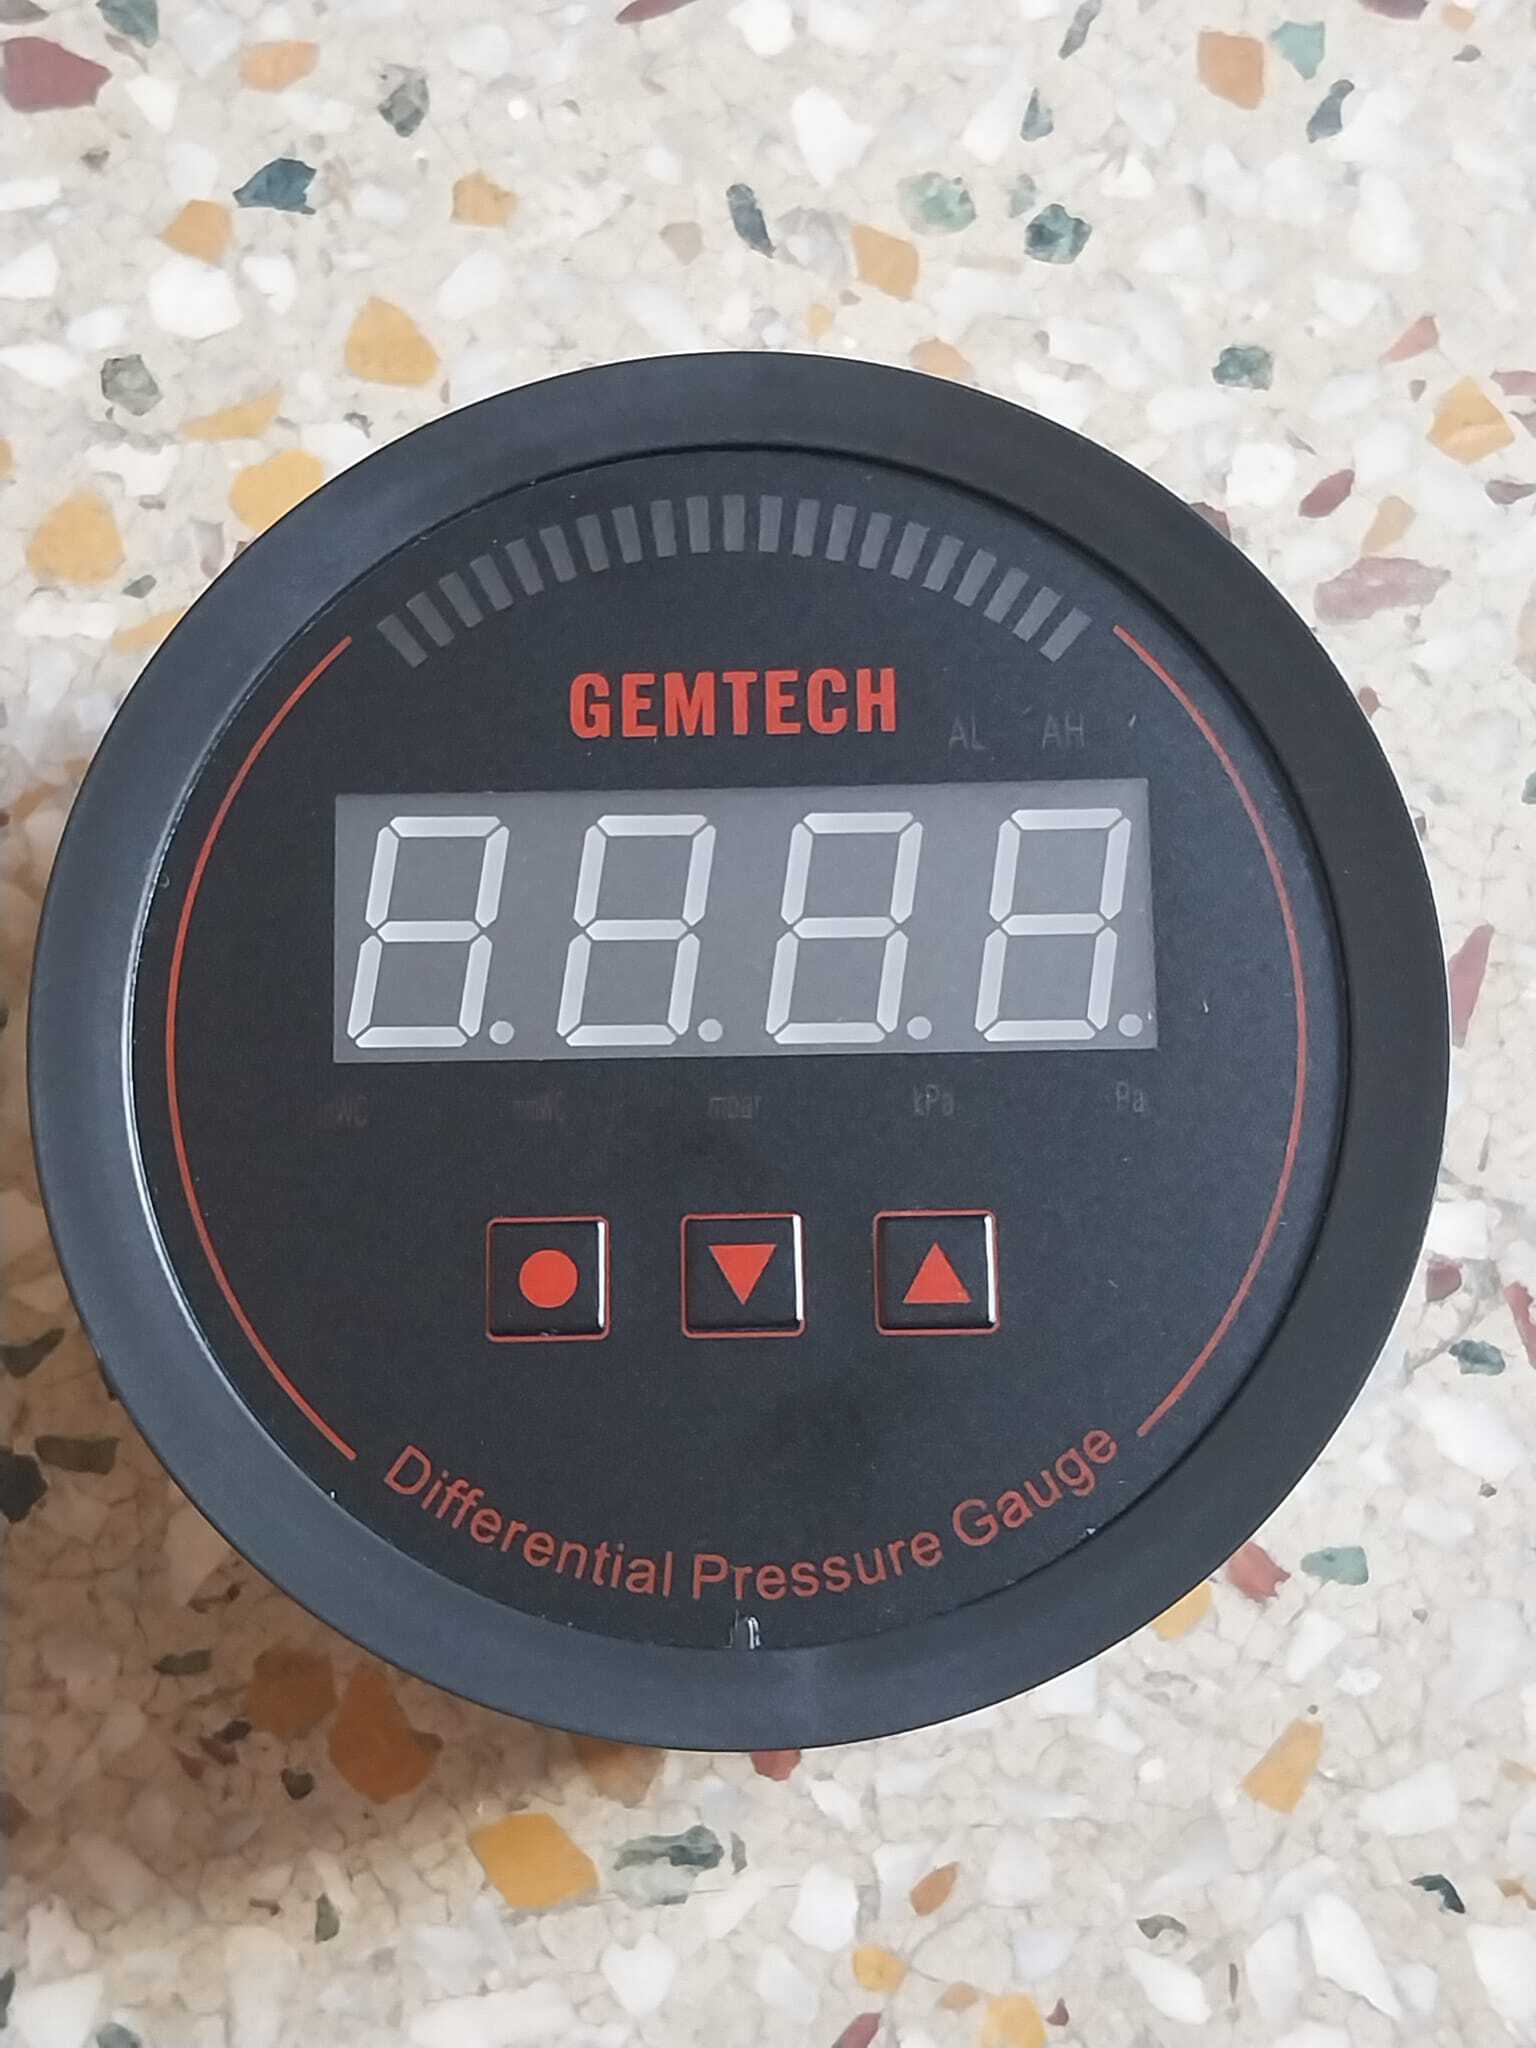 GEMTECH Series 3000 Digital Pressure Gauge With Alarm Range 0 to 25 MM WC